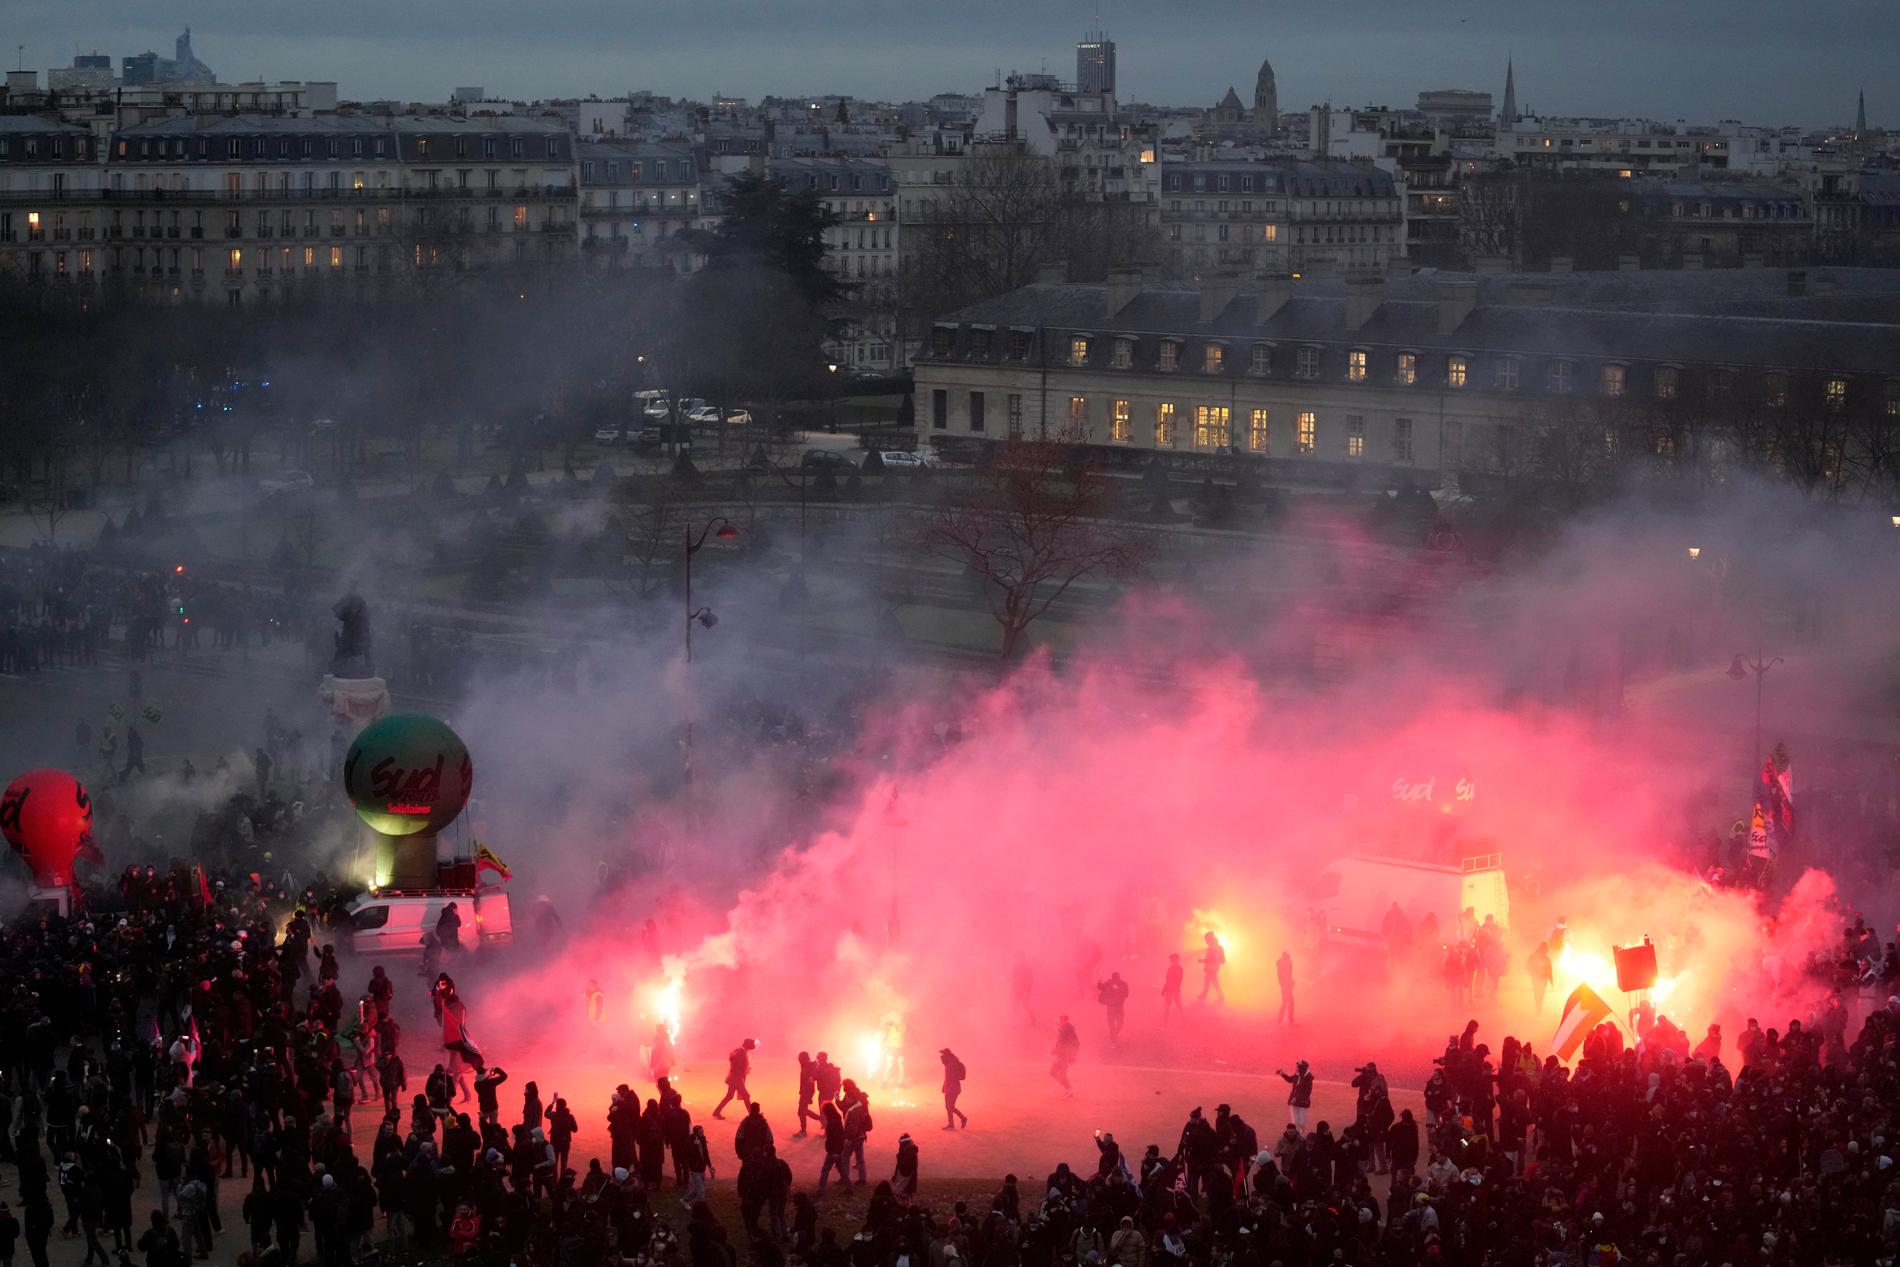 Senaste veckorna har Frankrike skakats av stora demonstrationer